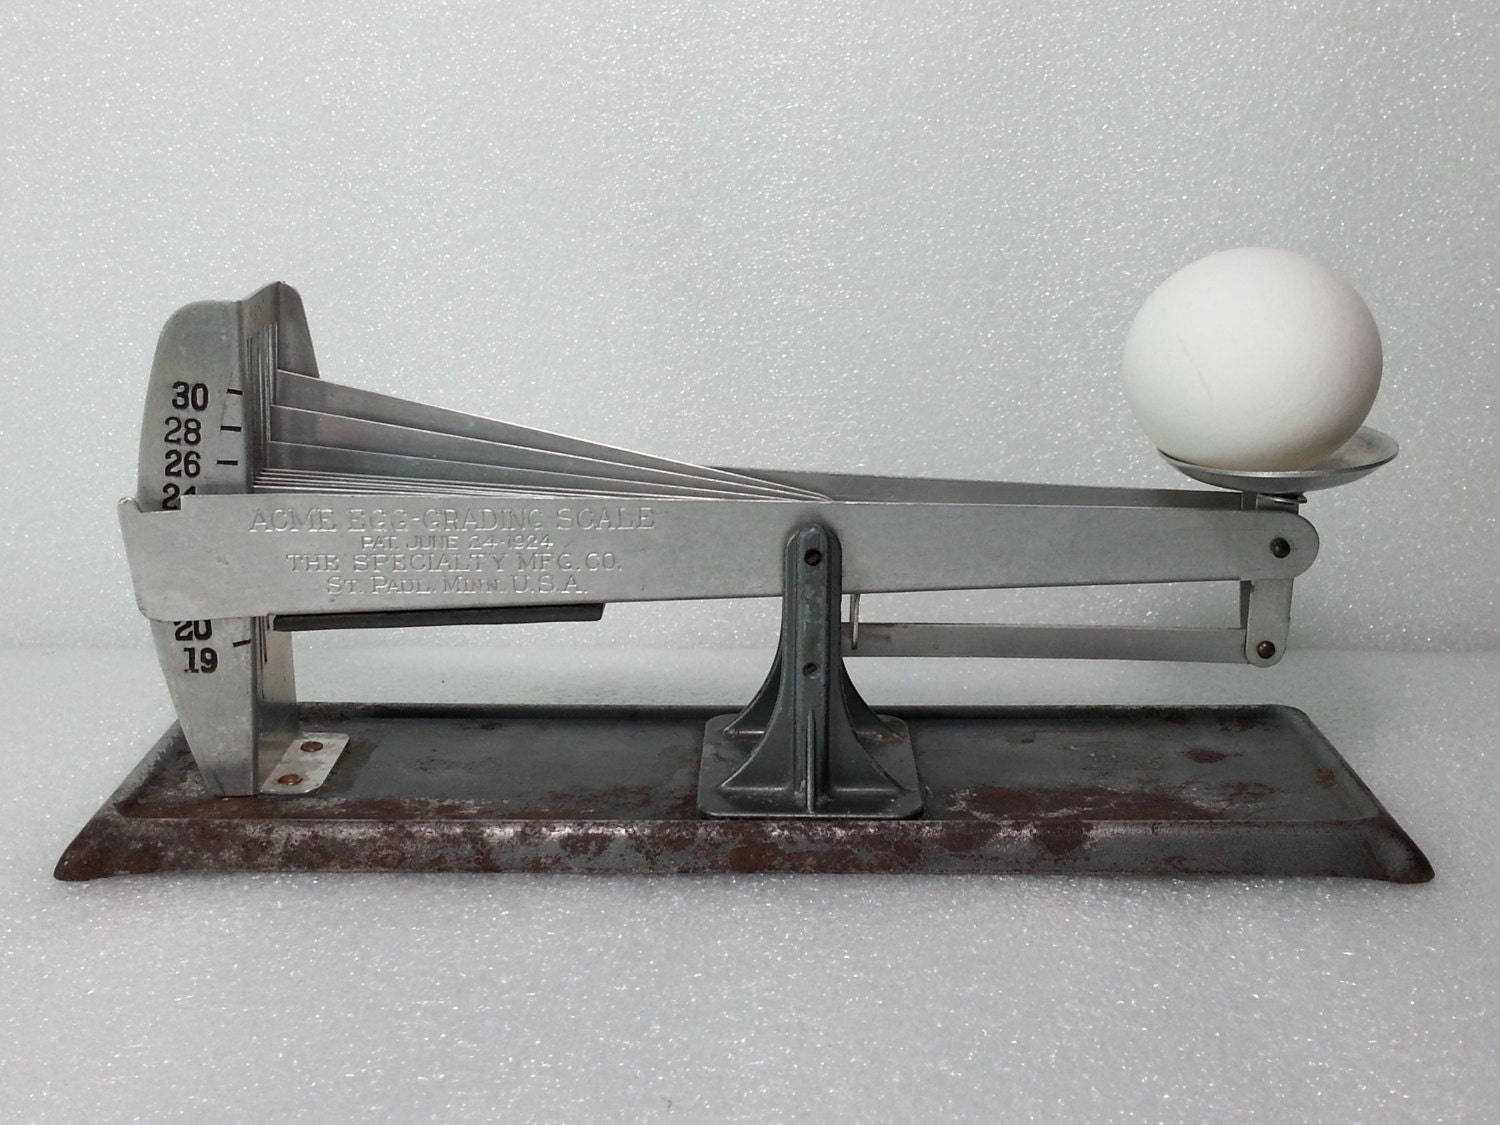 Vintage ACME Egg Grading Scale